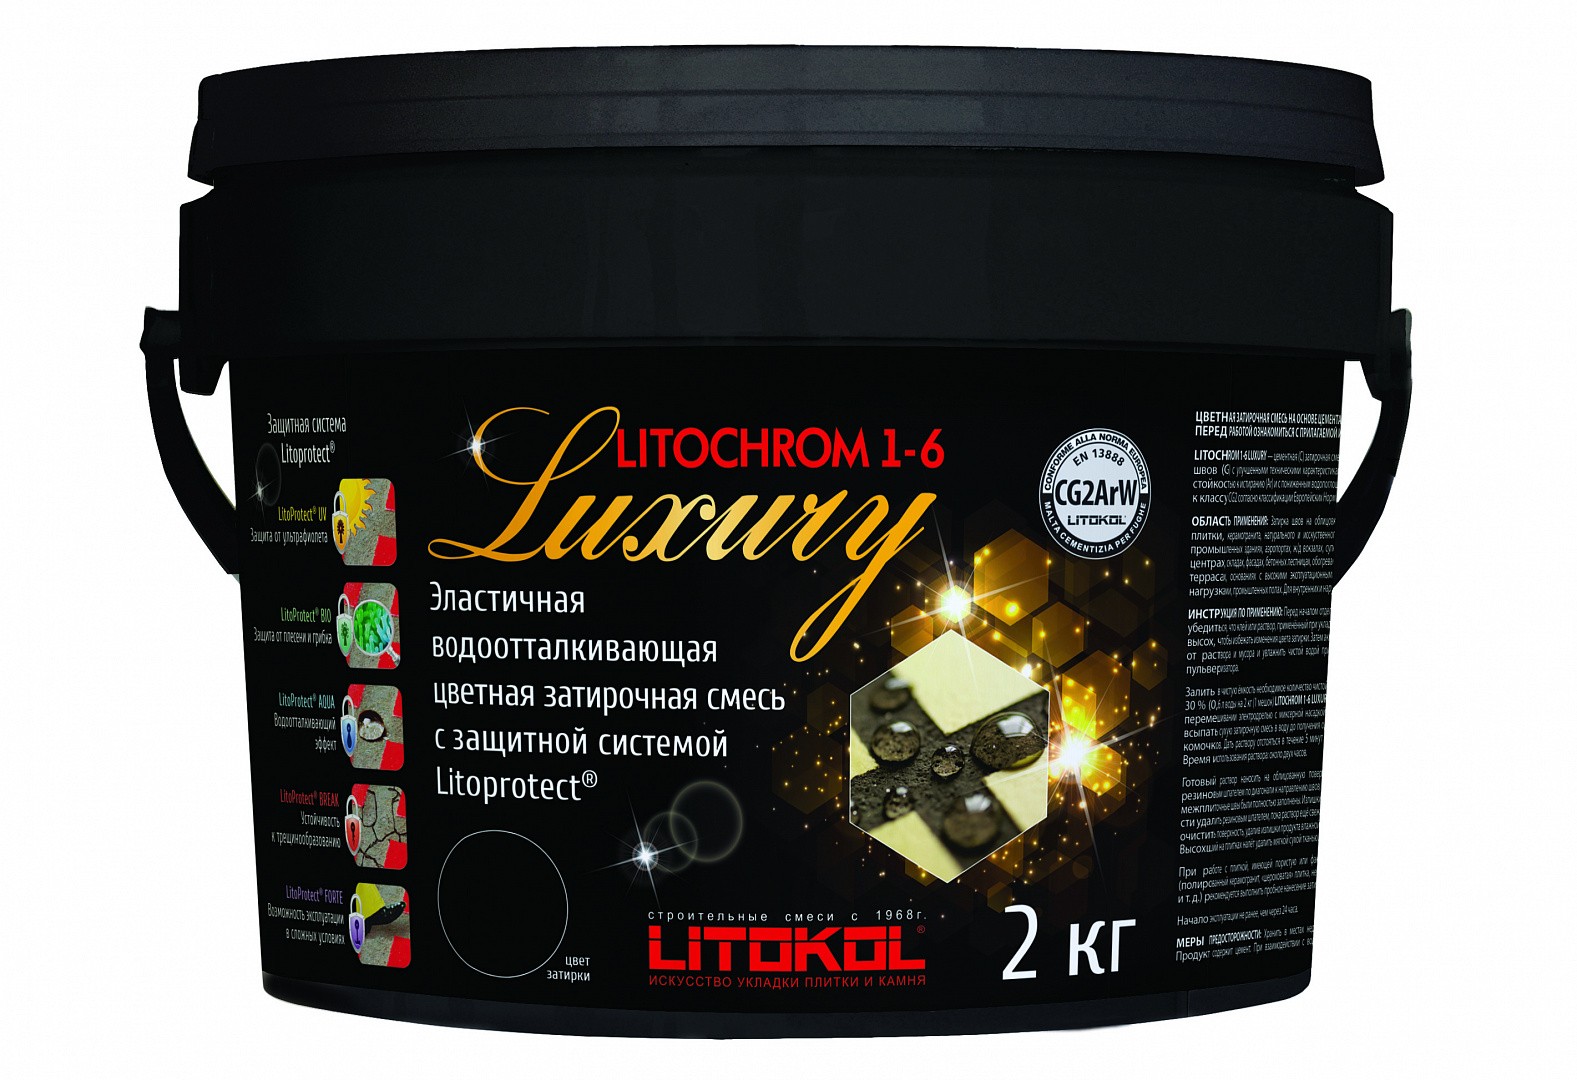 Цементная затирочная смесь LITOCHROM 1-6 LUXURY C.120